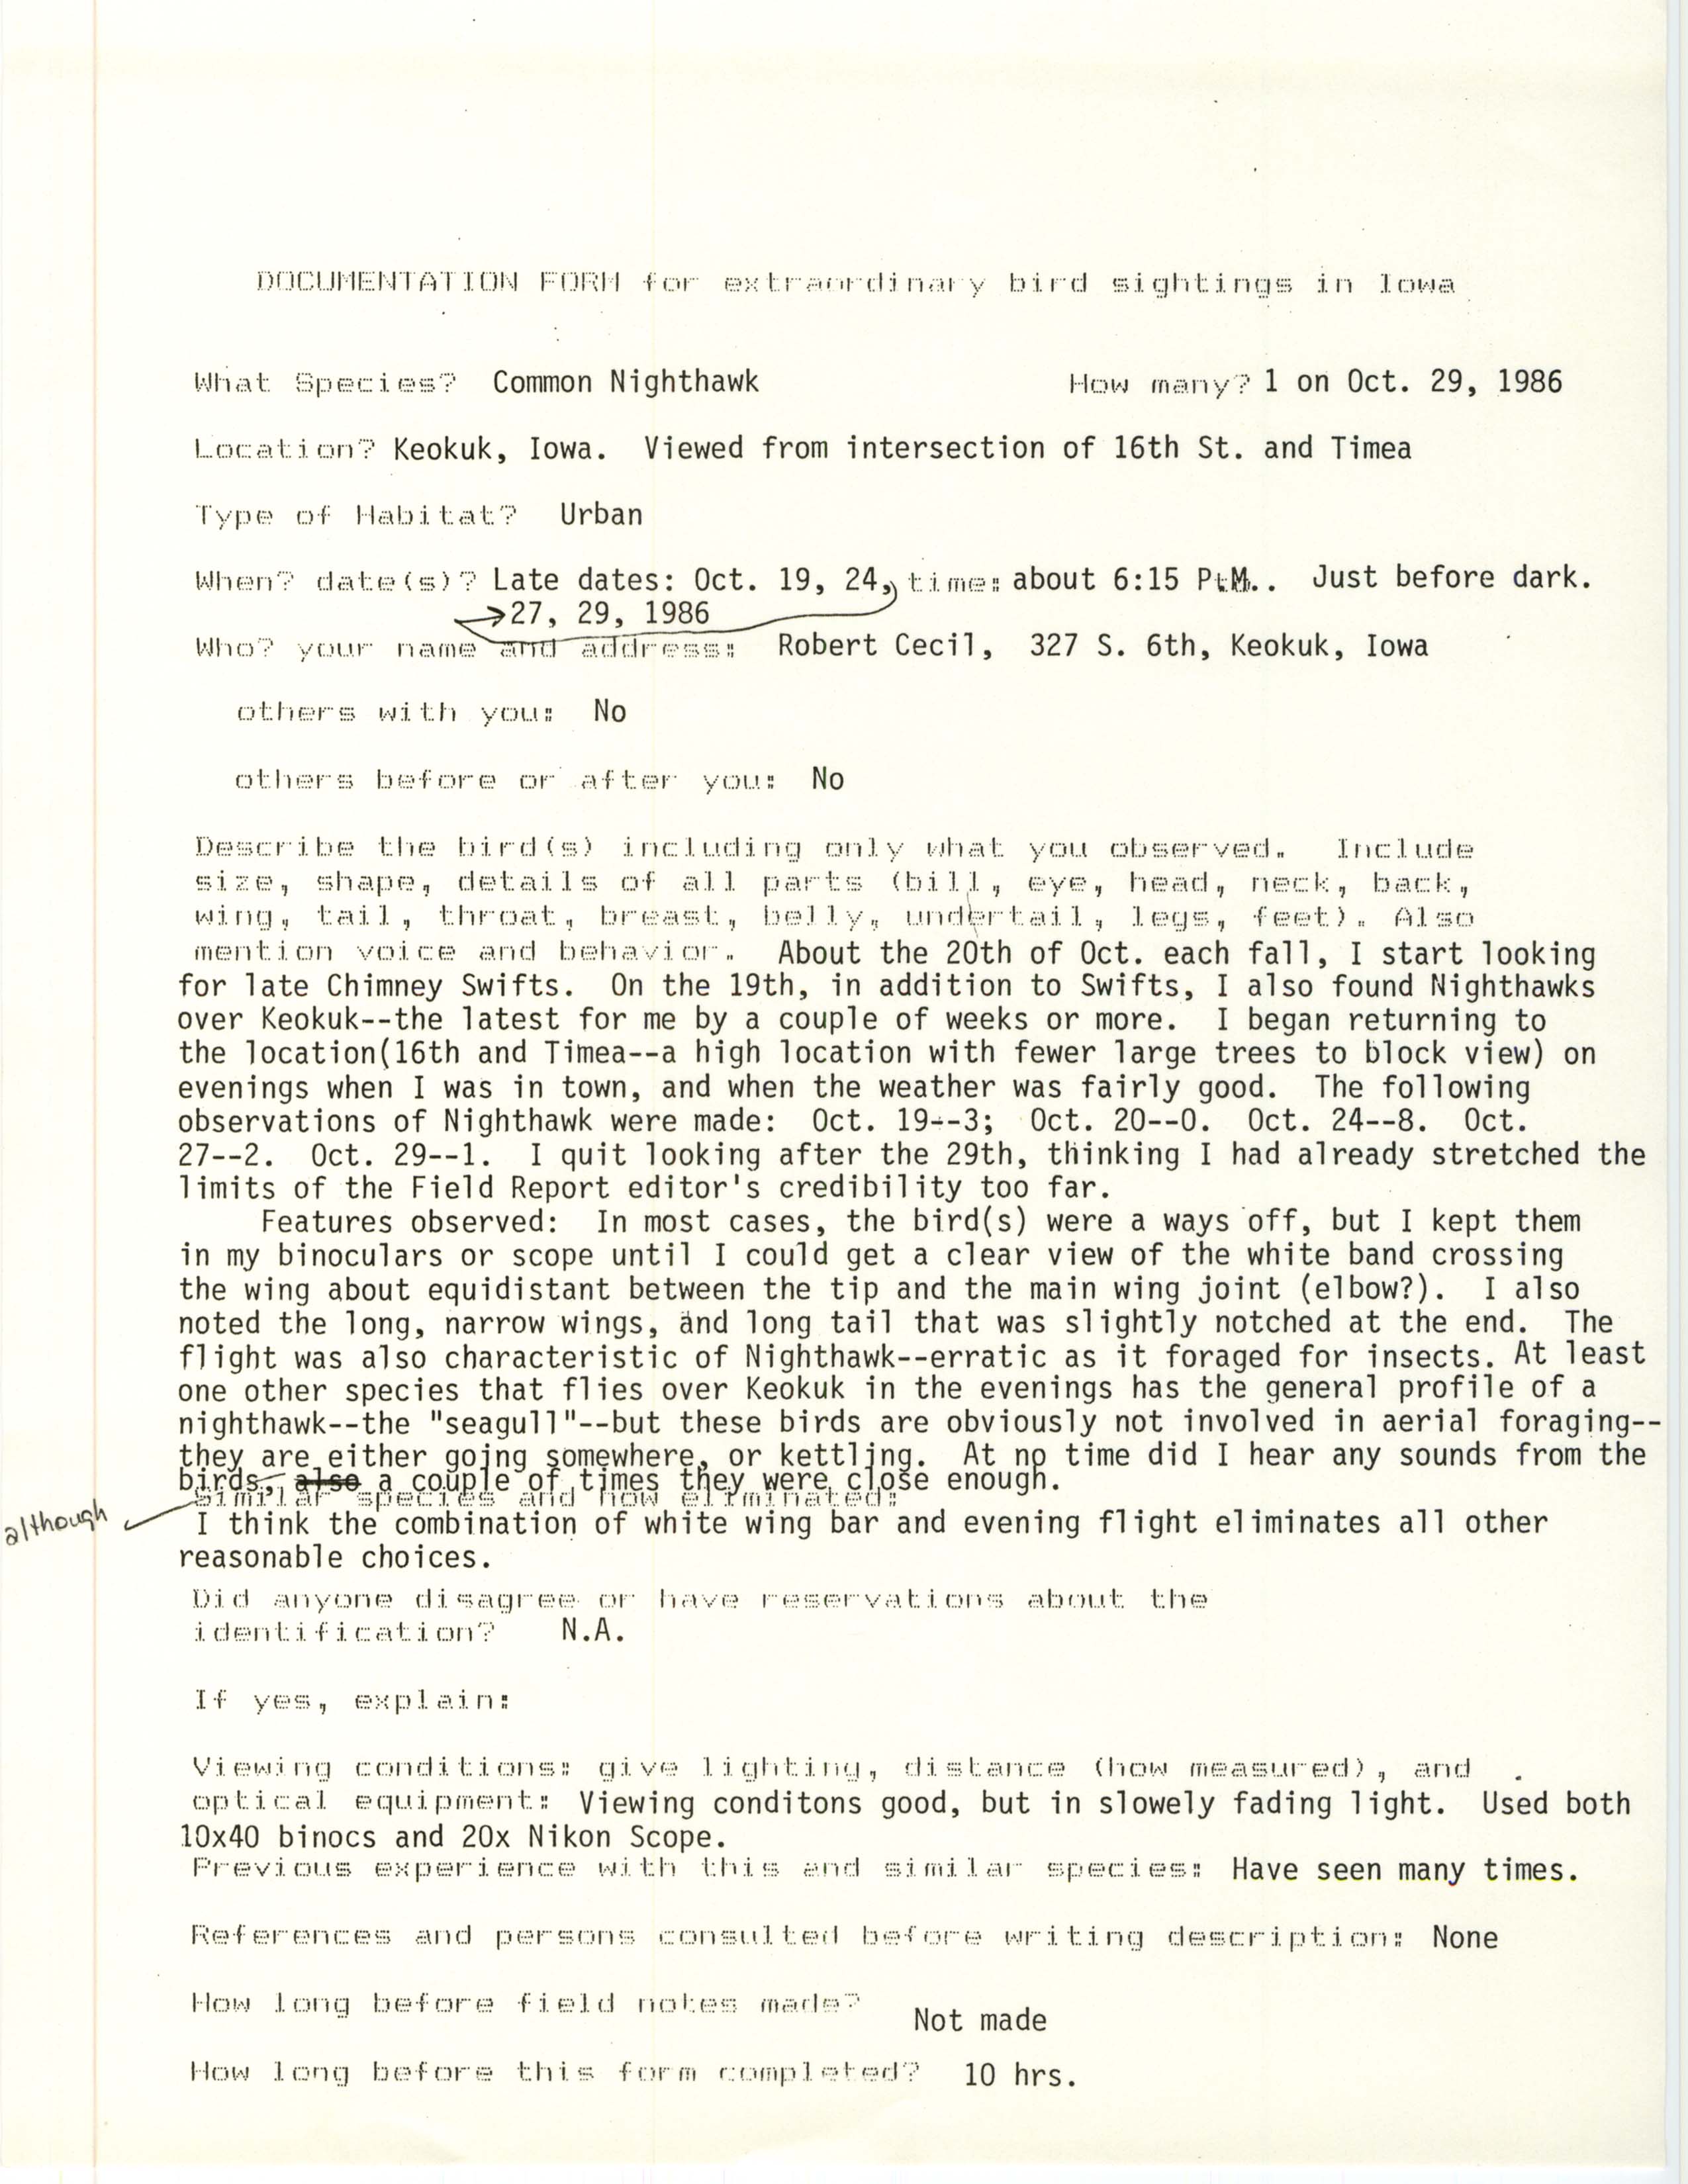 Rare bird documentation form for Common Nighthawk at Keokuk in 1986